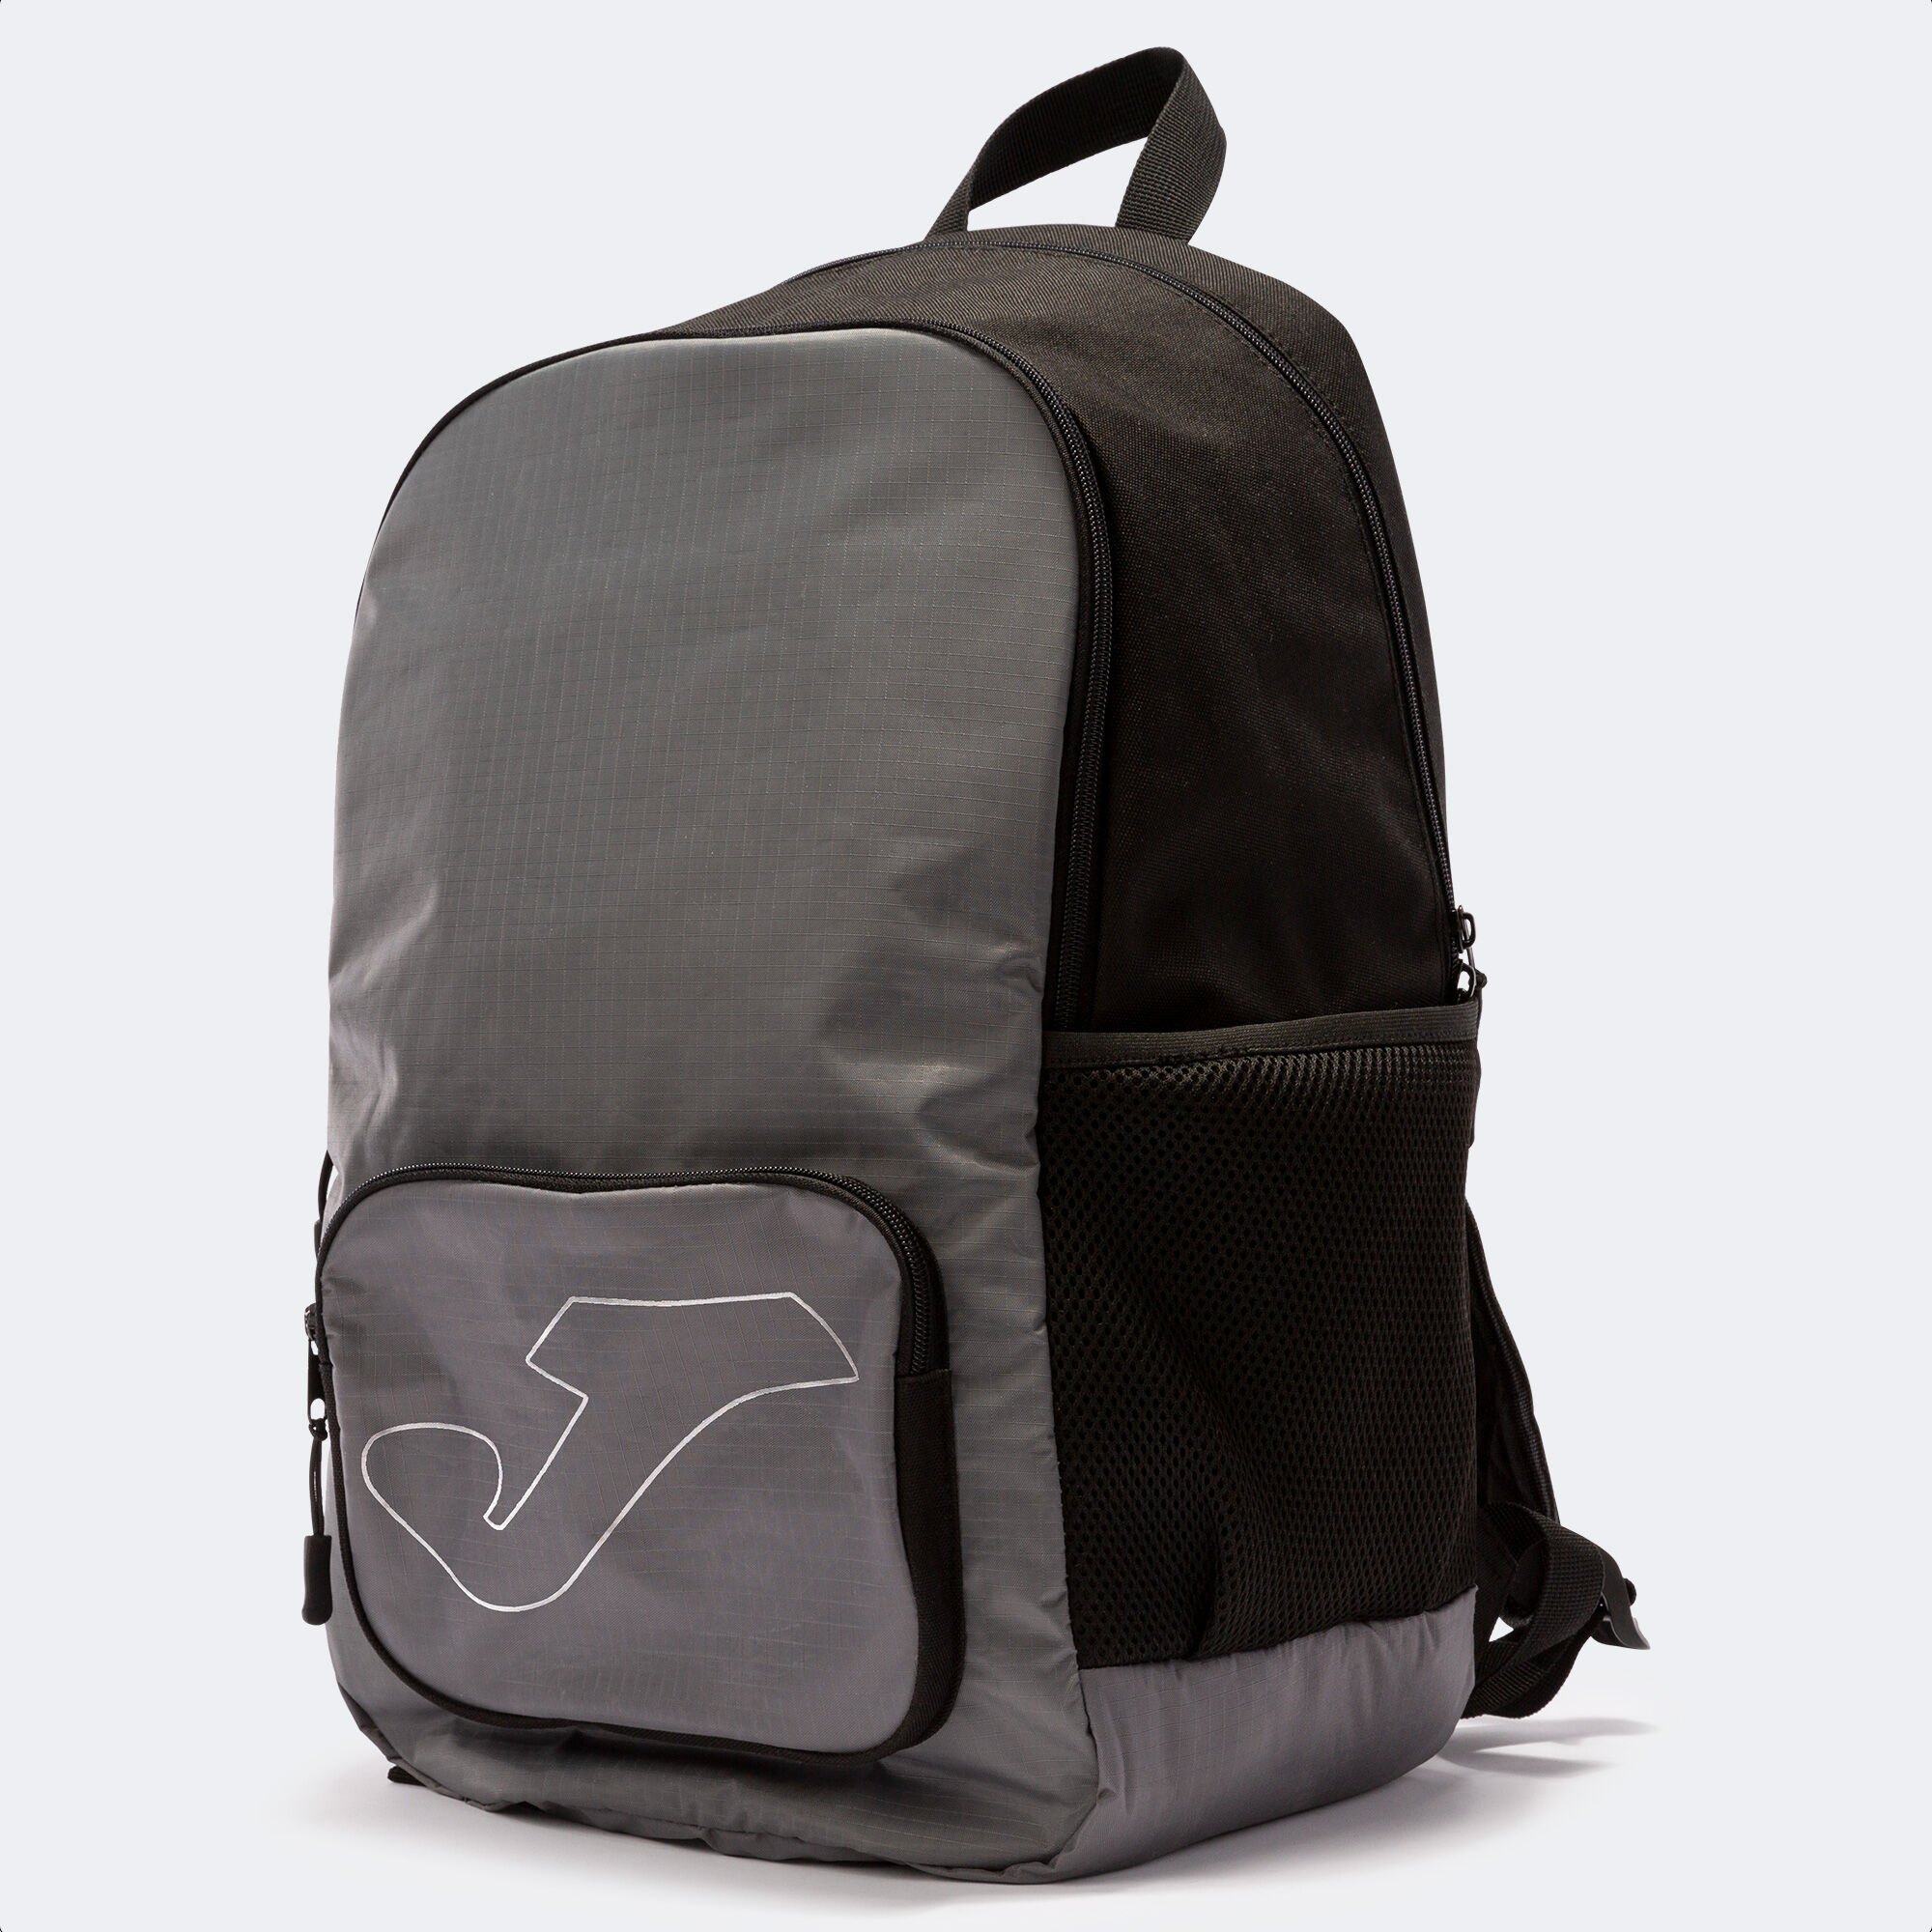 Backpack - shoe bag Academy black dark gray